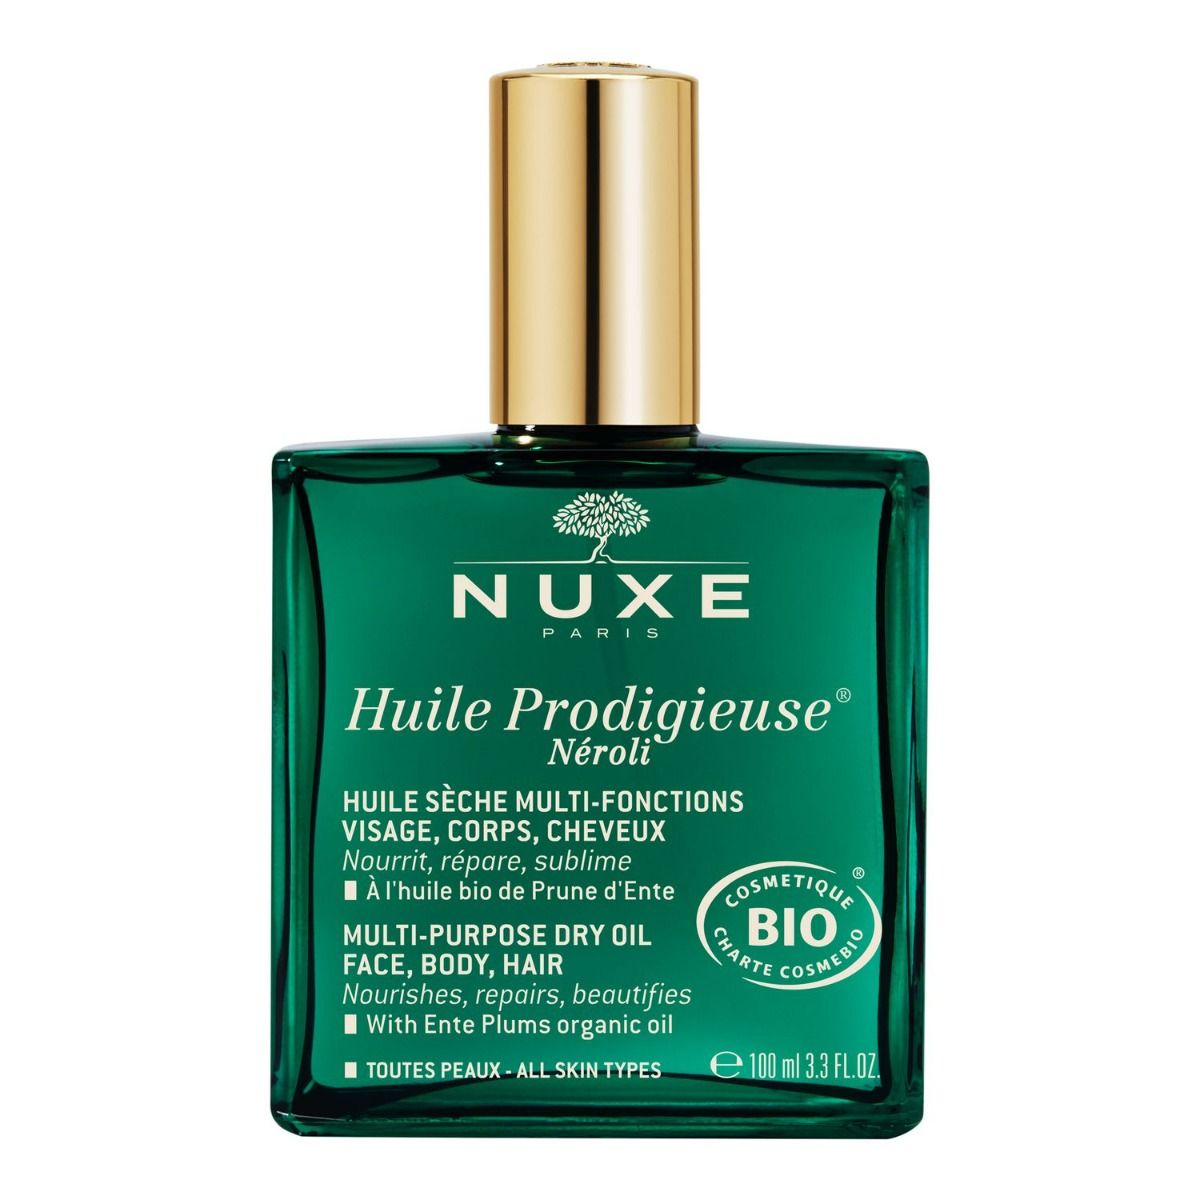 Nuxe Huile Prodigieuse Neroli масло для лица, тела и волос, 100 ml nuxe масло для тела huile prodigieuse florale 100 мл